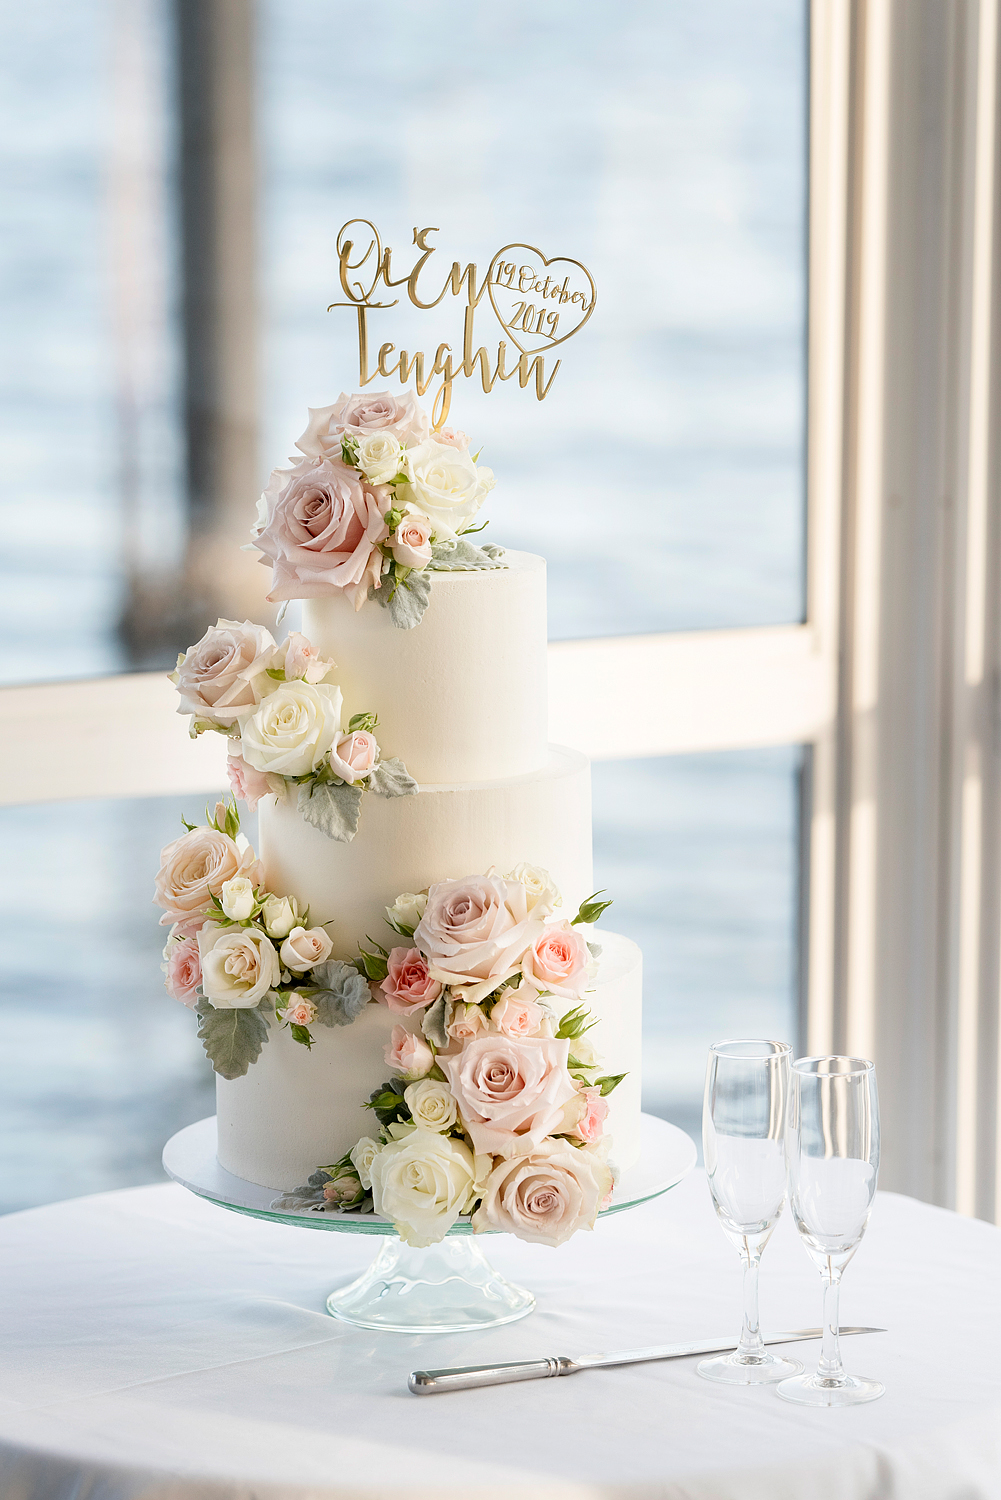 Perth Wedding Cake